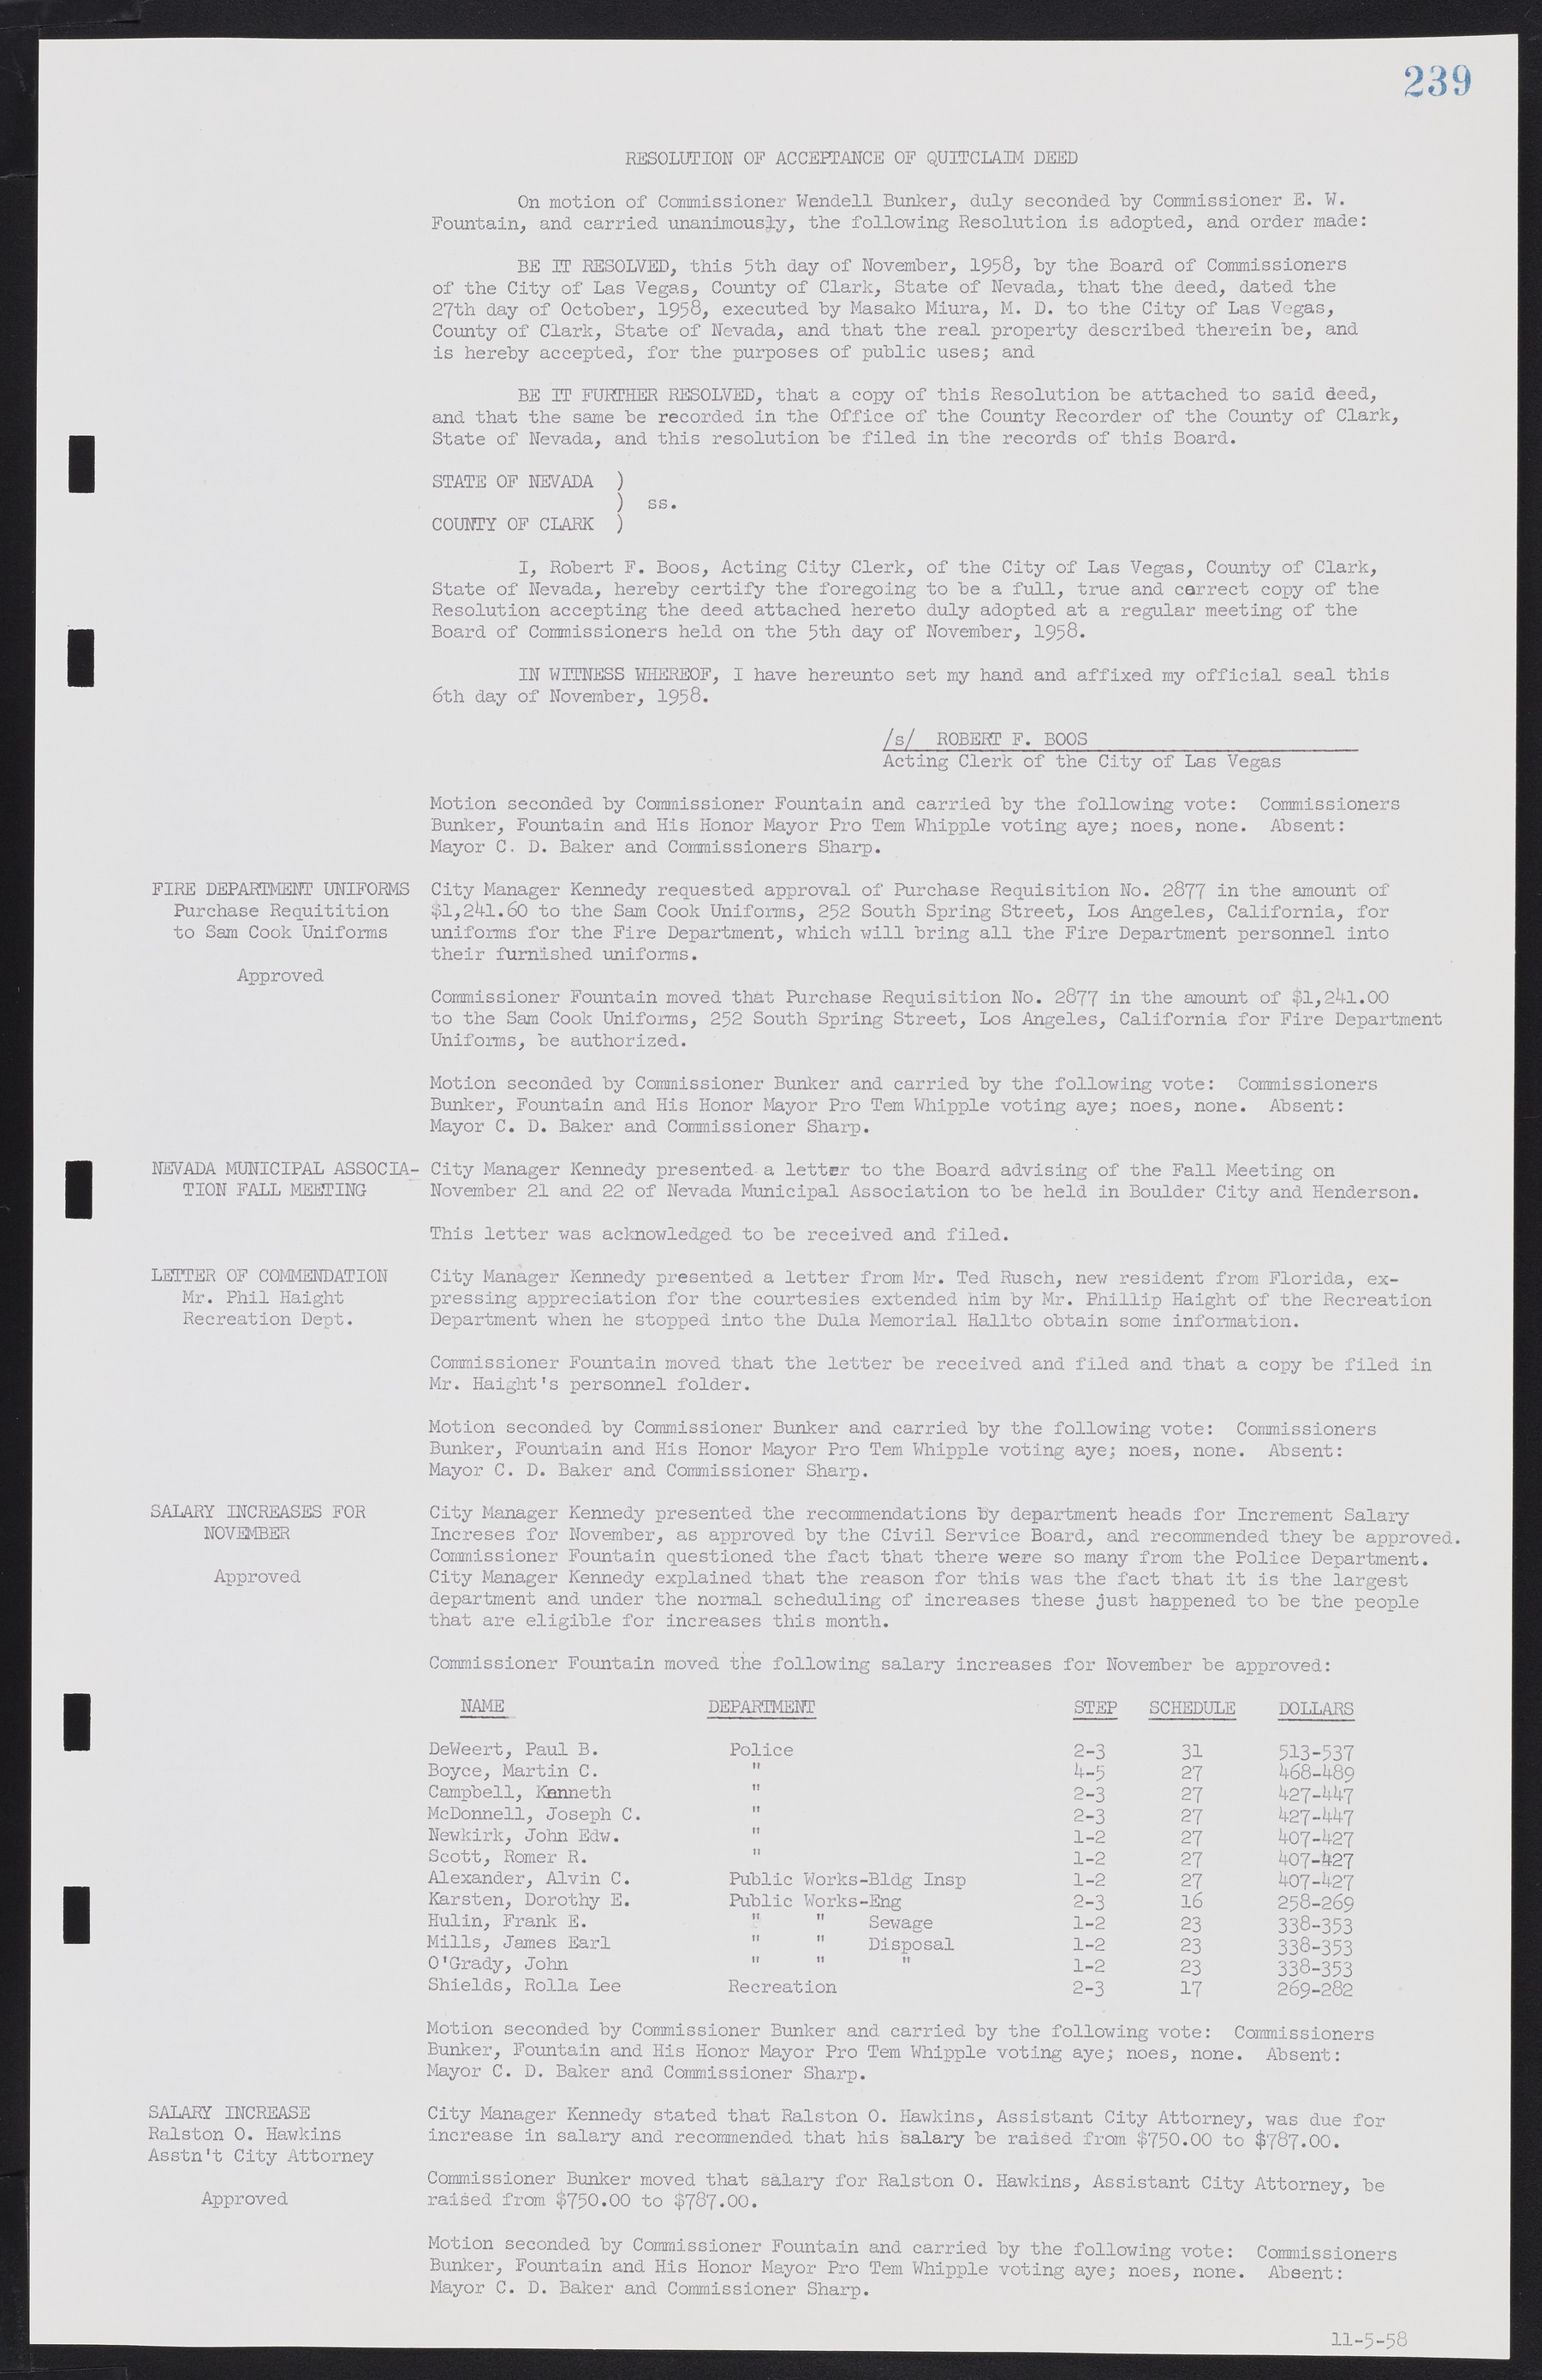 Las Vegas City Commission Minutes, November 20, 1957 to December 2, 1959, lvc000011-247